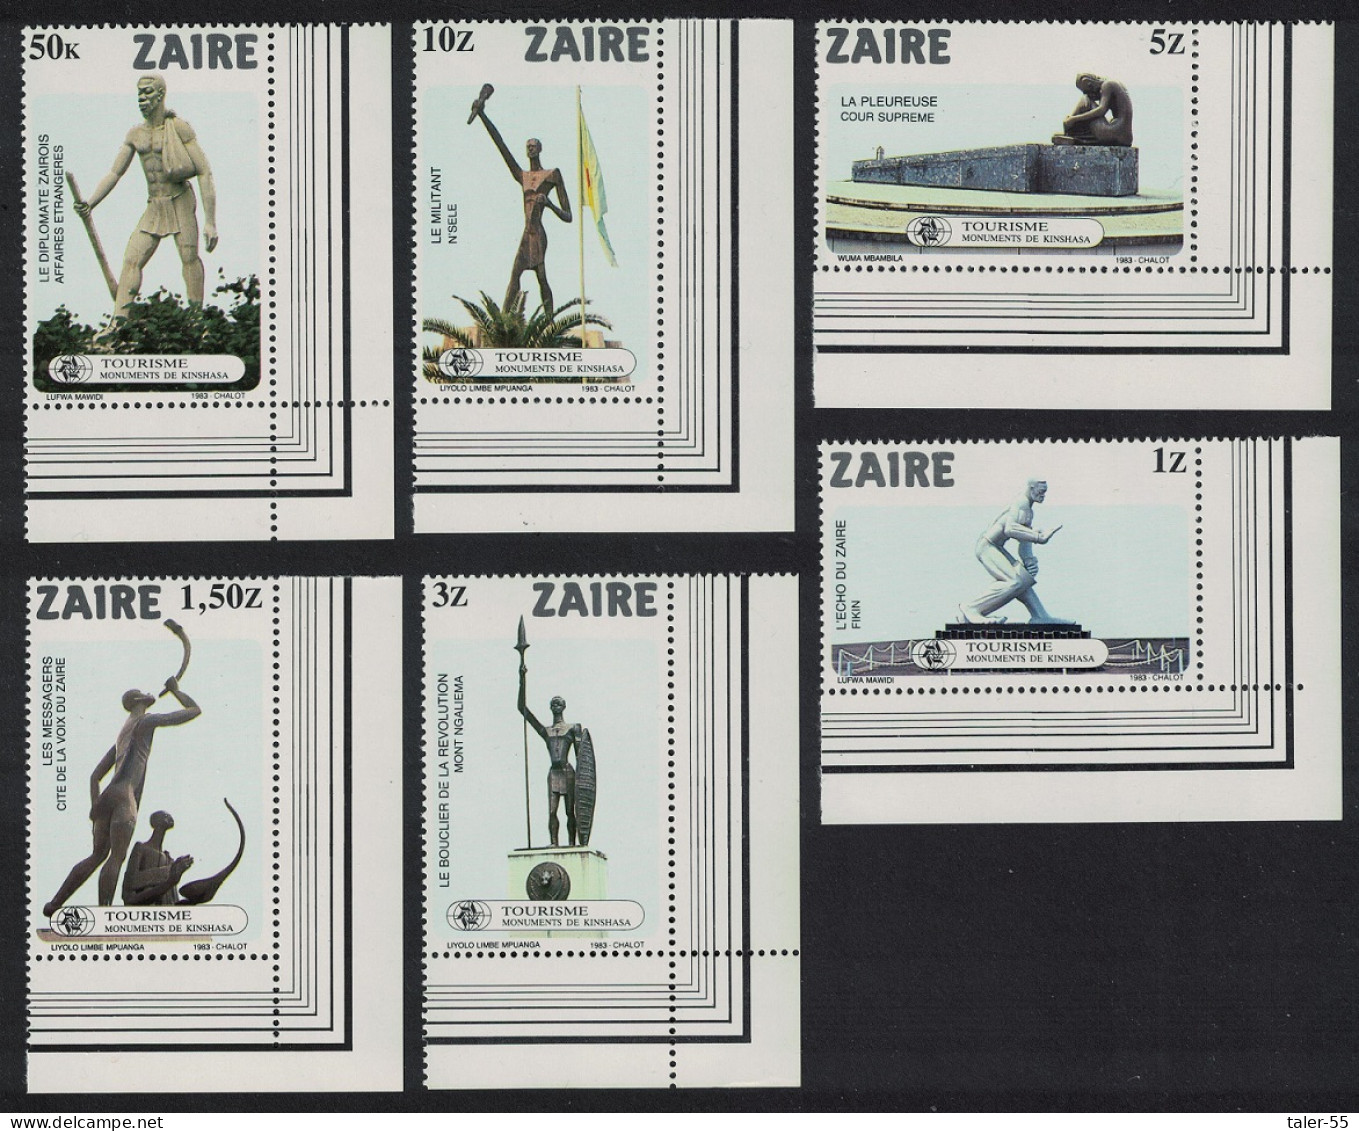 Zaire Kinshasa Monuments 6v Corners 1983 MNH SG#1157-1162 Sc#1115-1120 - Neufs